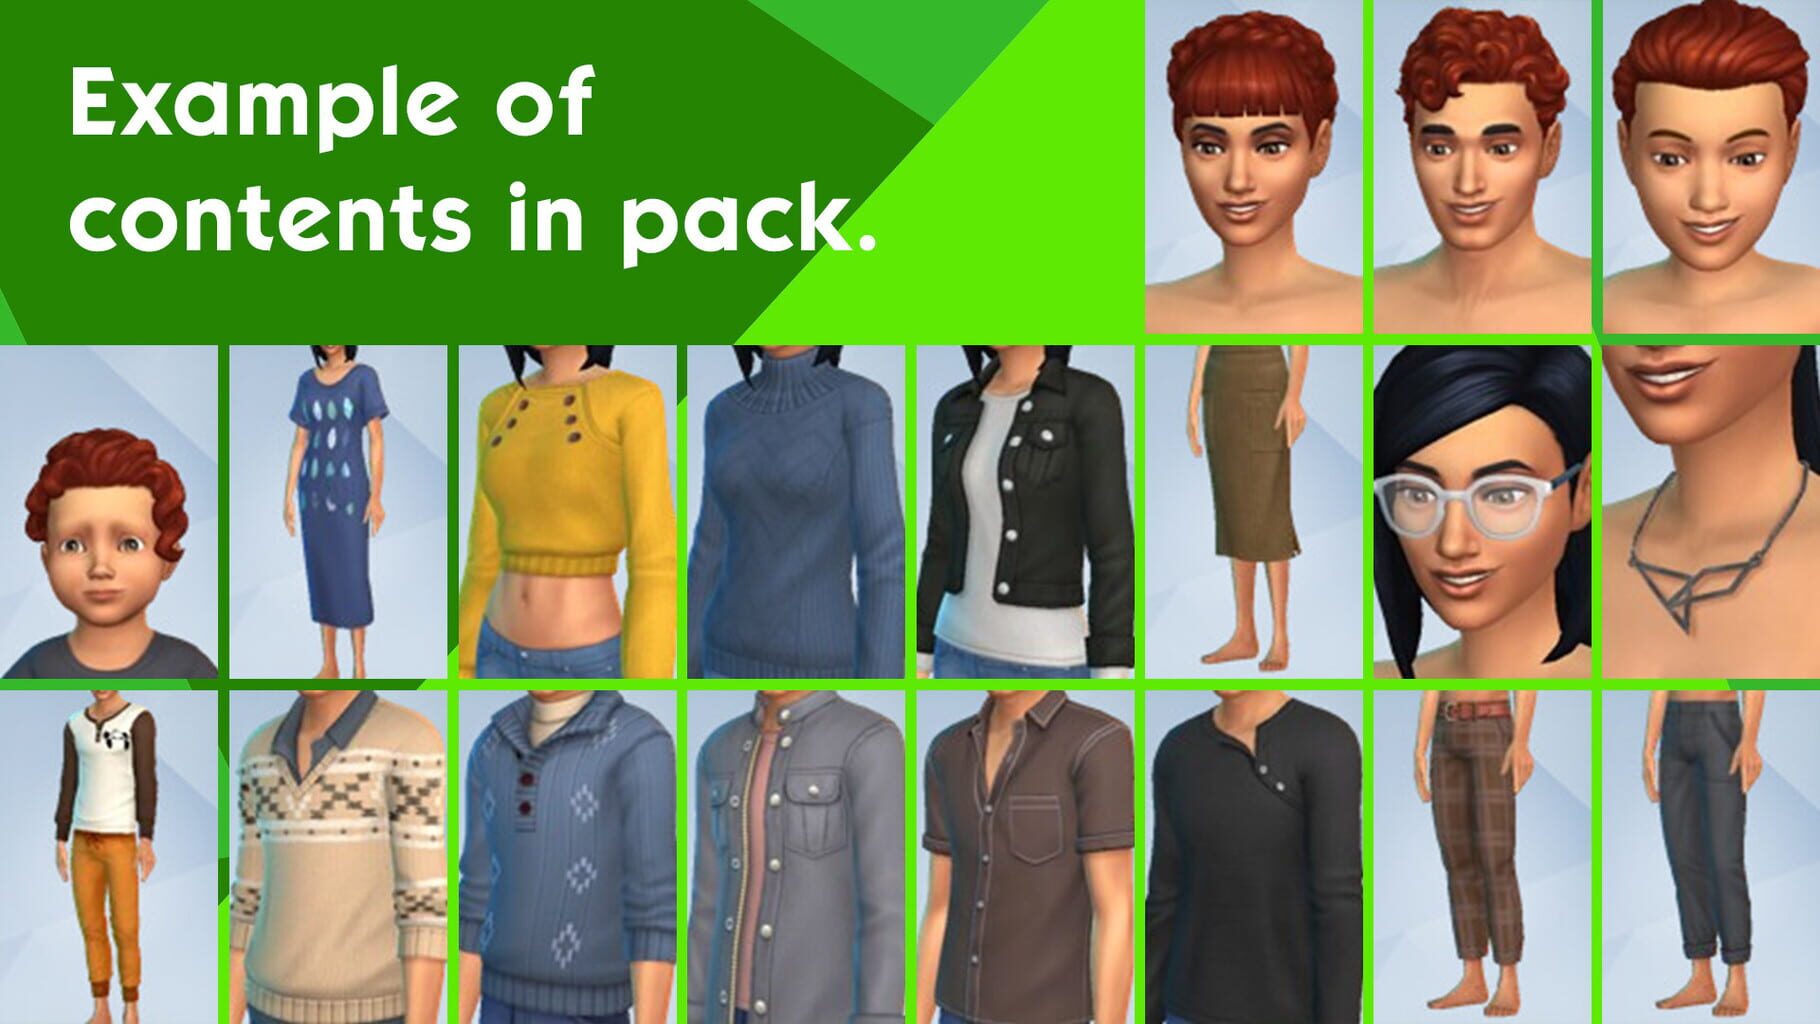 The Sims 4: Tiny Living Stuff Image